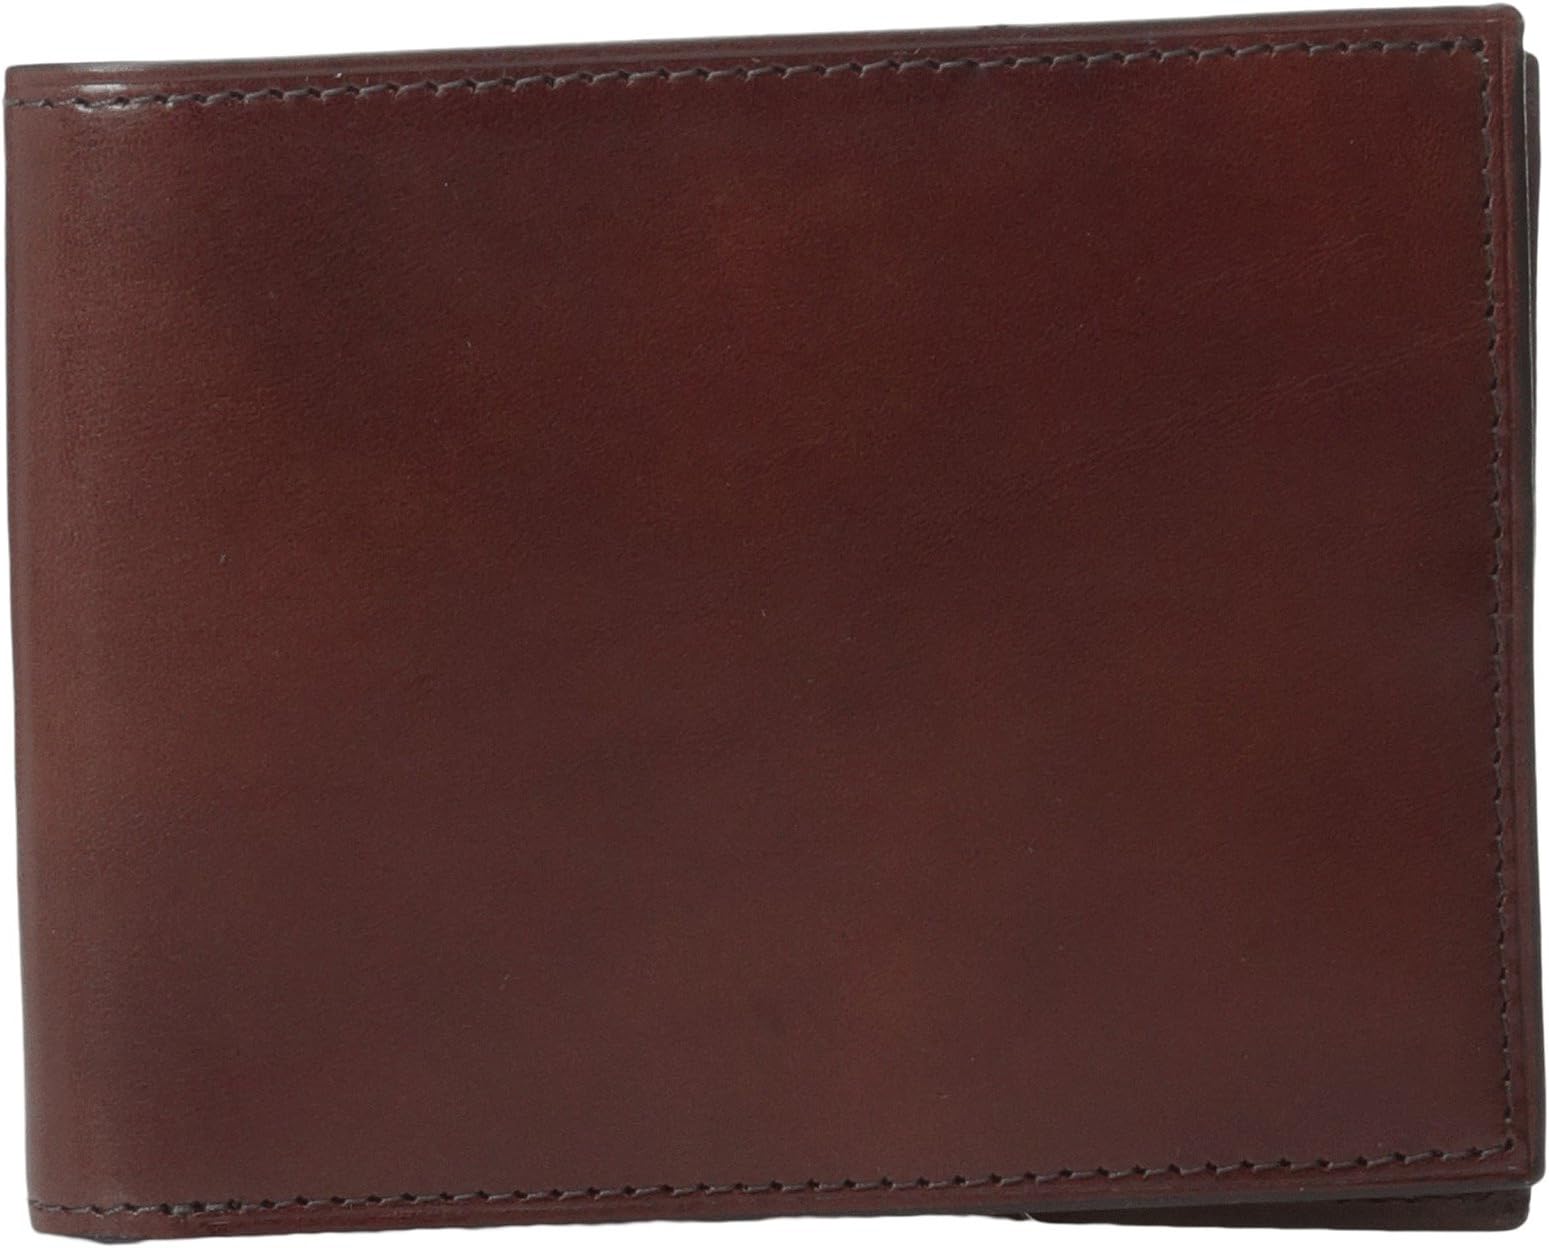 Коллекция Old Leather — кошелек Executive ID Bosca, цвет Dark Brown Leather